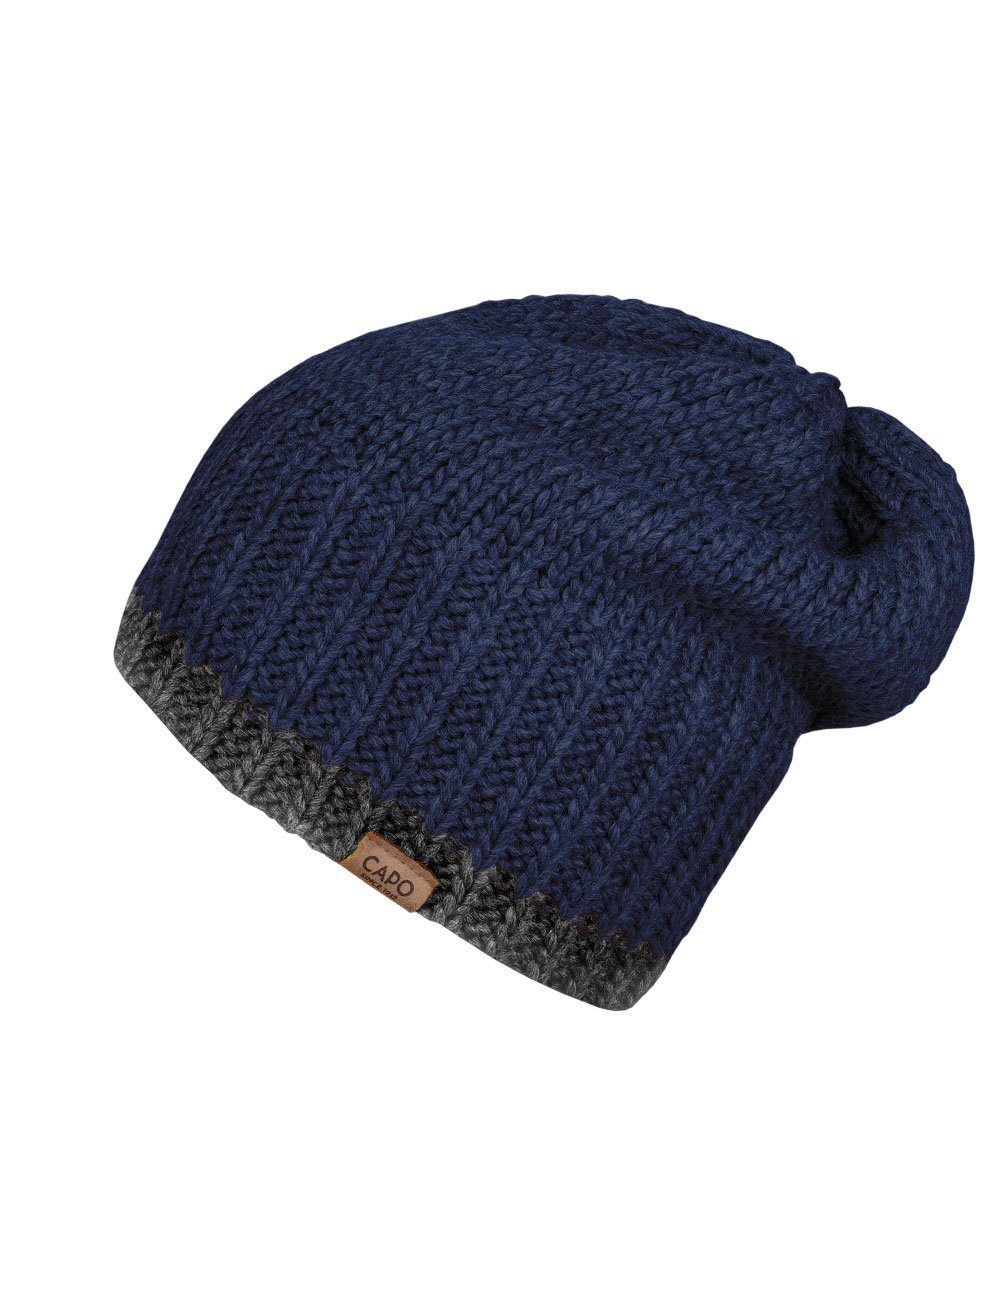 CAPO Strickmütze CAPO-KEELIN CAP knitted navy in Germany fleece cap, lining Made short